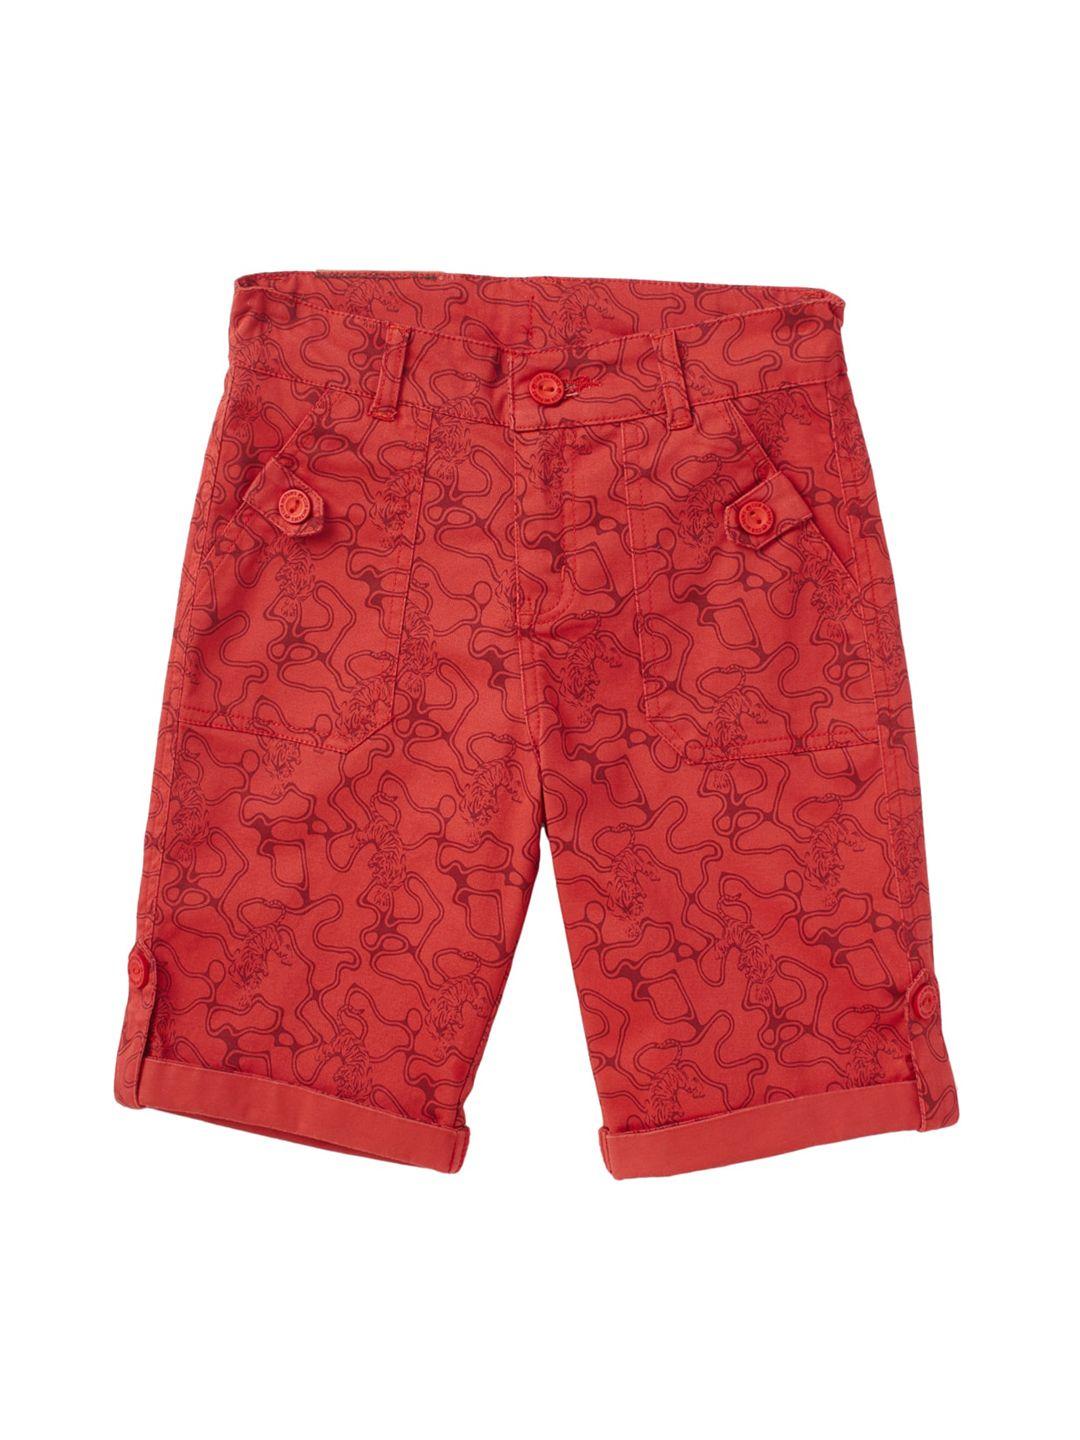 cub mcpaws boys red floral printed shorts